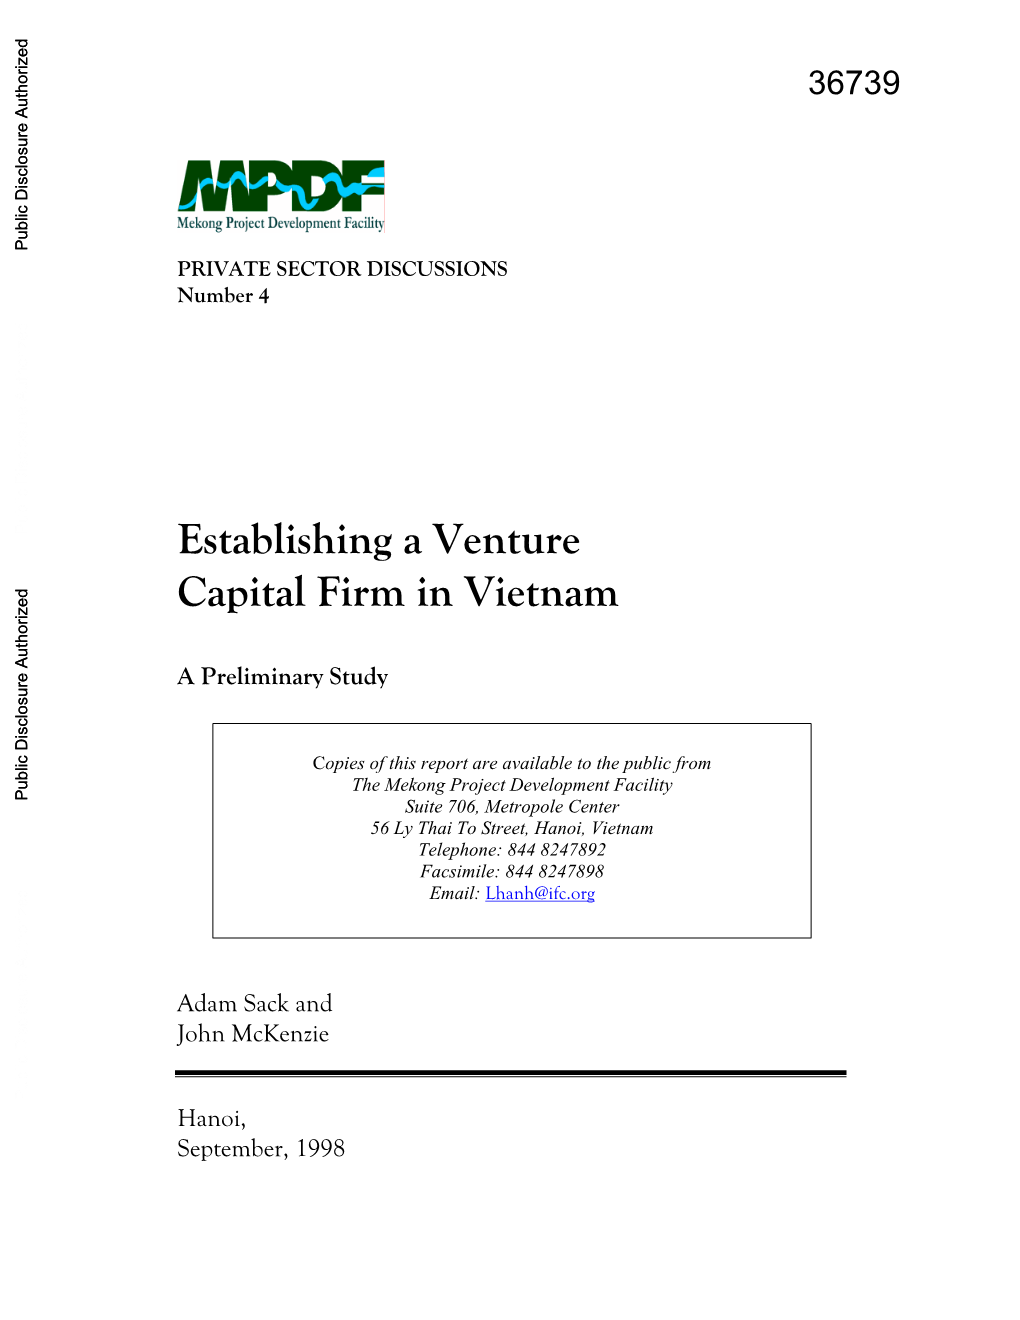 Establishing a Venture Capital Firm in Vietnam A